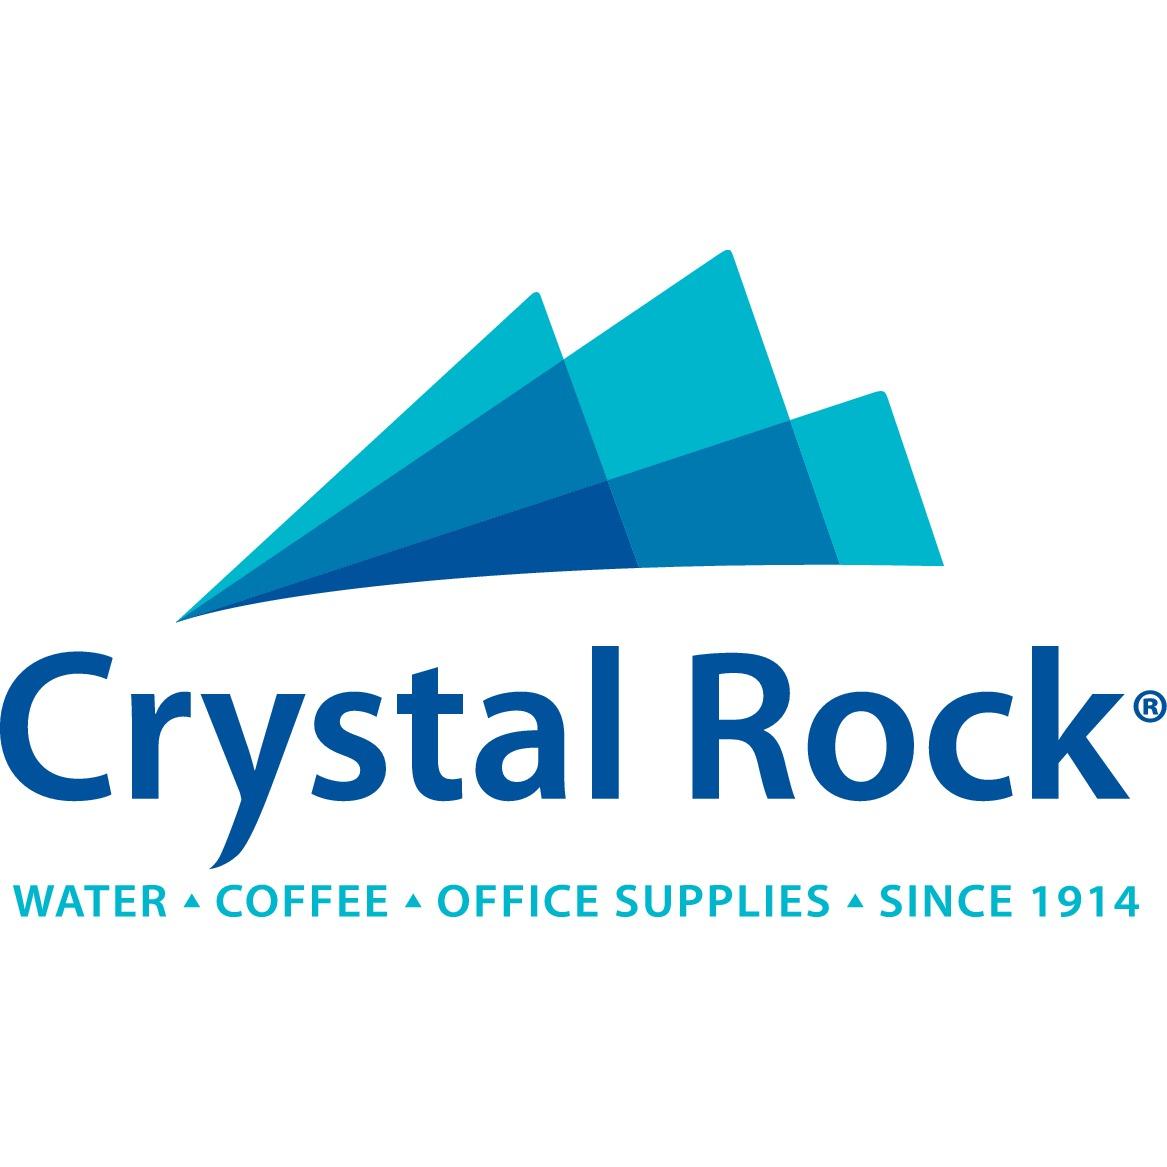 Crystal Rock Water